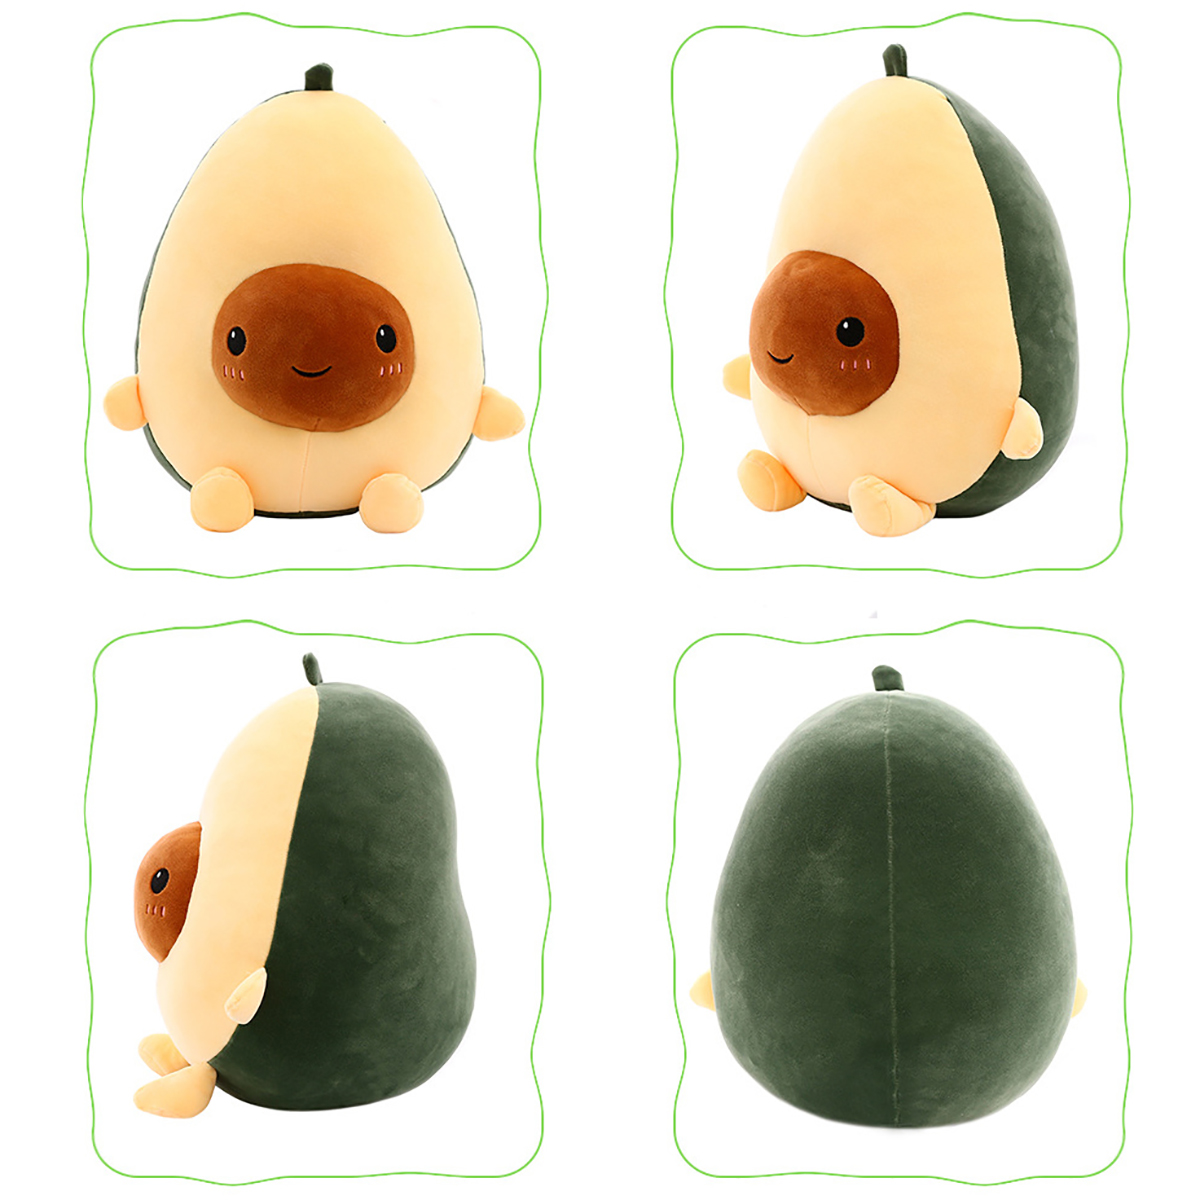 253560CM-Cute-Avocado-Stuffed-Plush-Toy-Soft-Baby-Doll-Cartoon-Fruit-Pillow-Sofa-Cushion-for-Kids-Bi-1627709-4